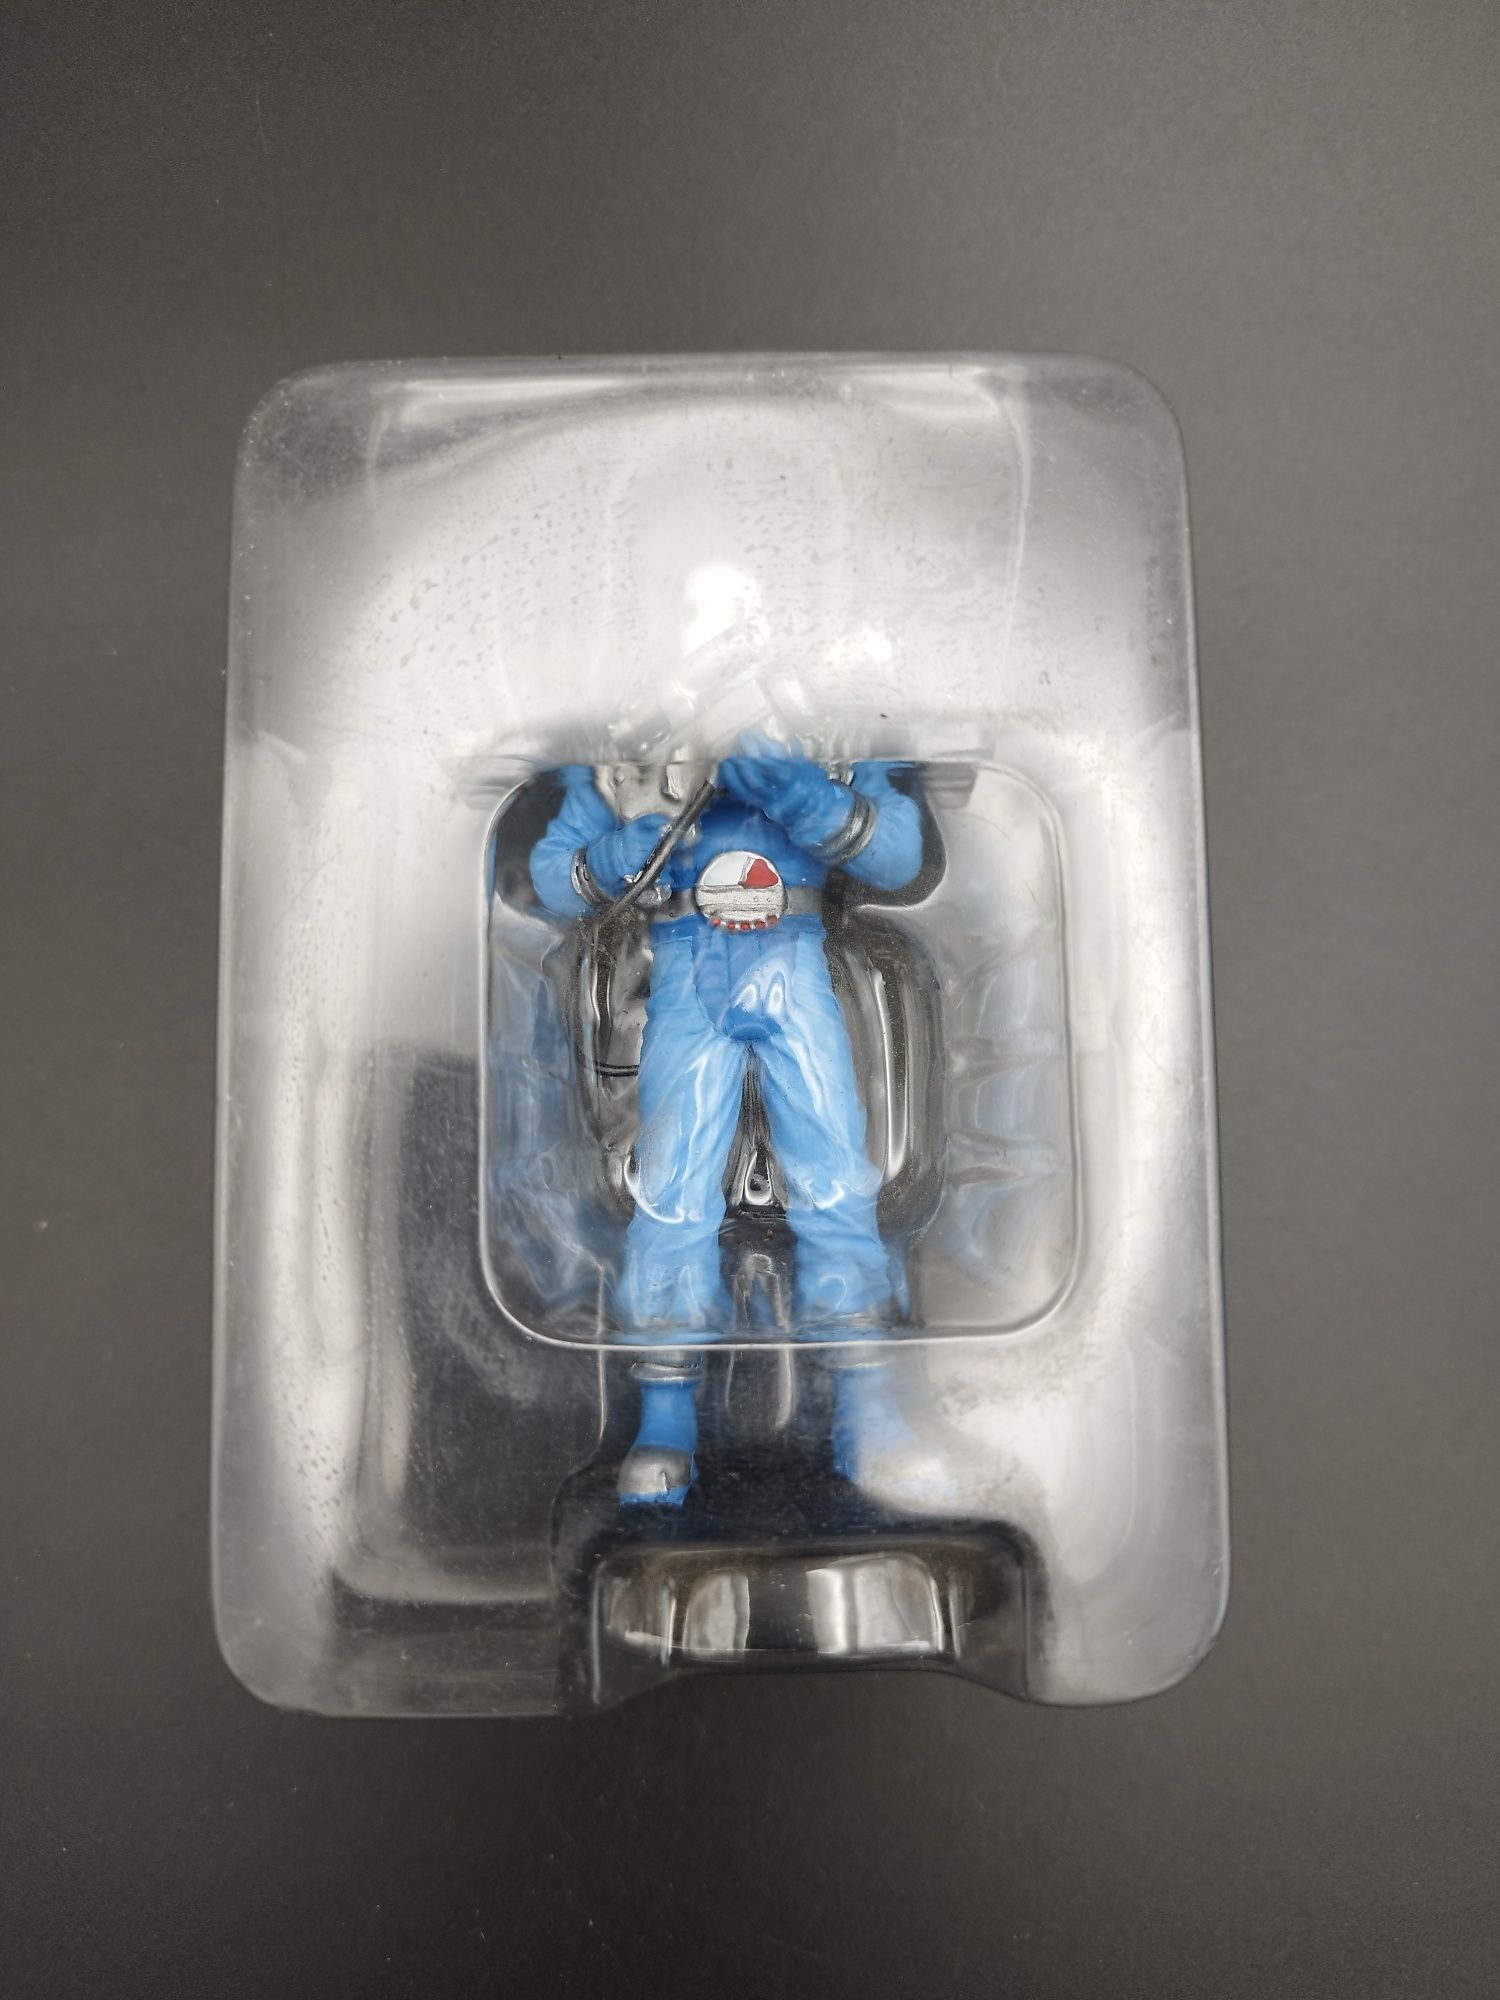 Figurka DC Comics Mister Freeze ok 10 cm cieżka ołowiana